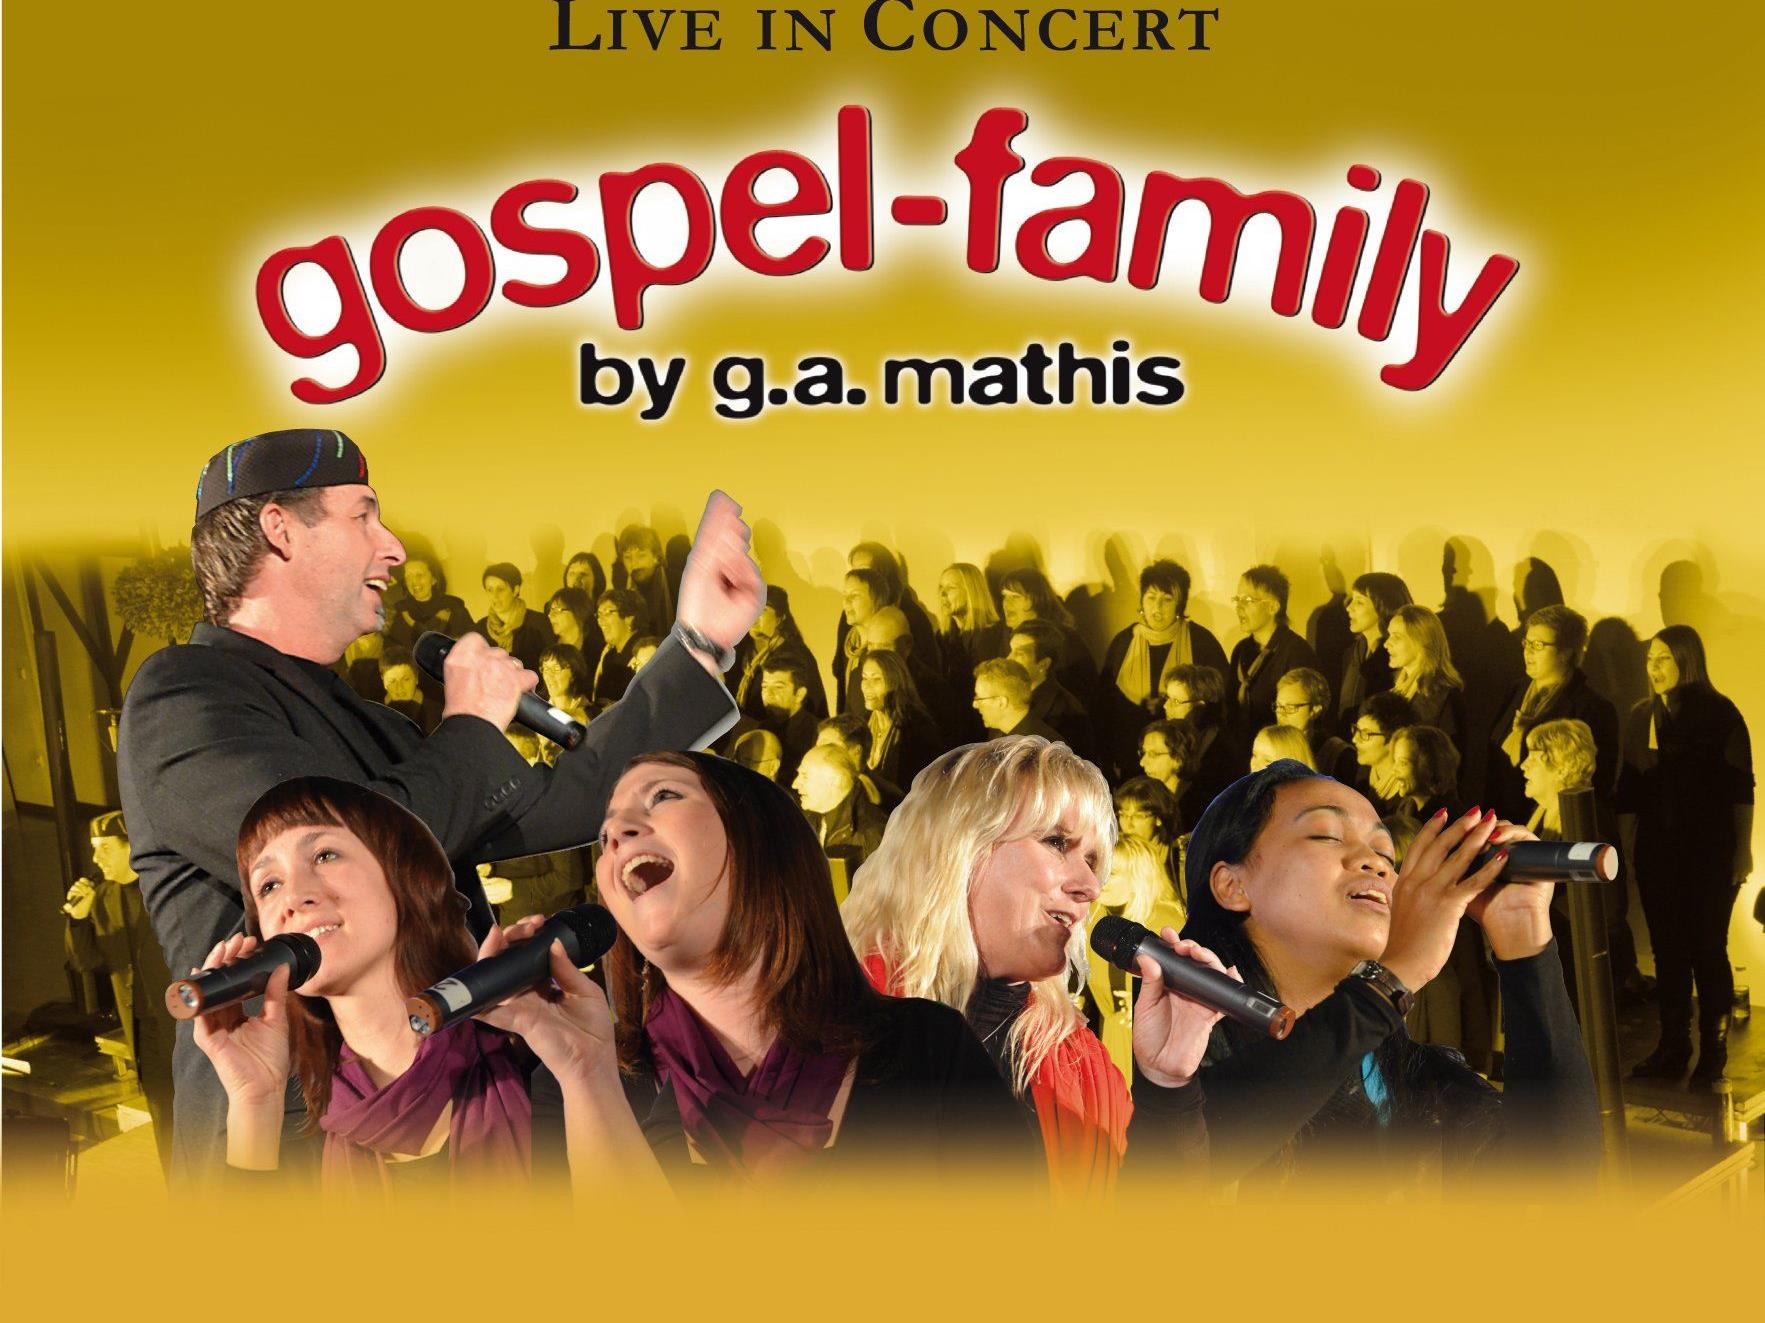 Gospel-family by g.a.mathis